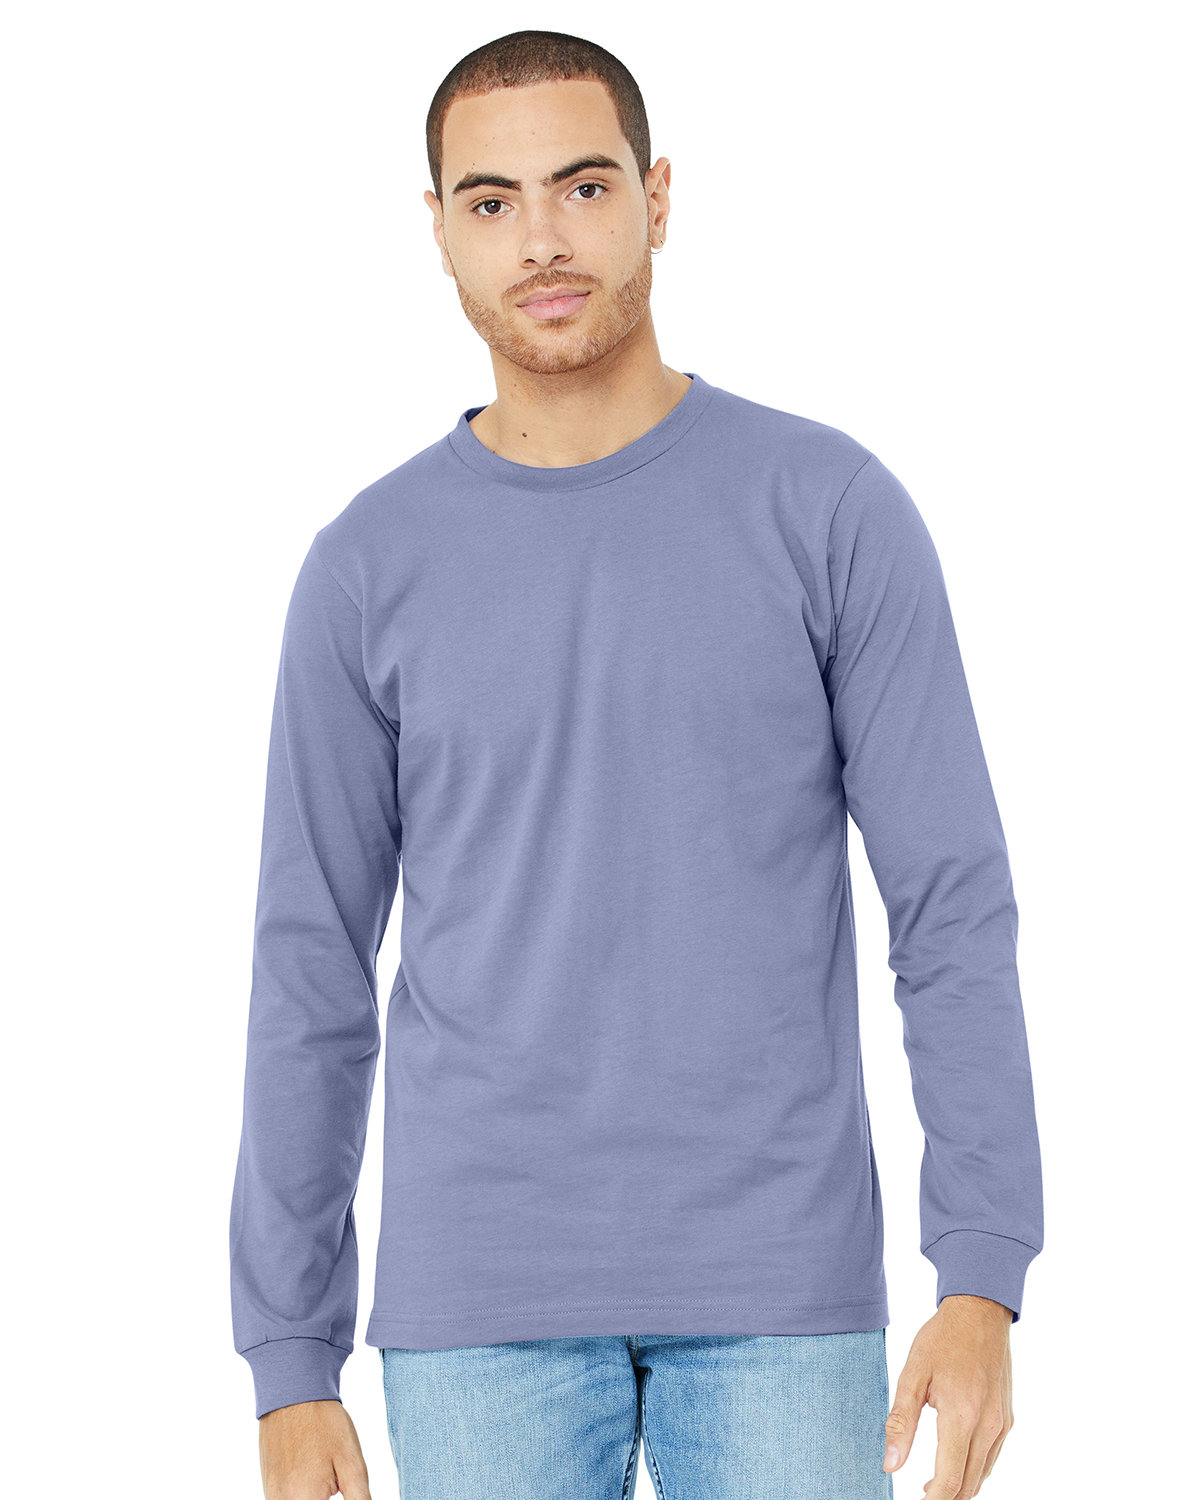 Bella + Canvas Unisex Jersey Long-Sleeve T-Shirt lavender blue 